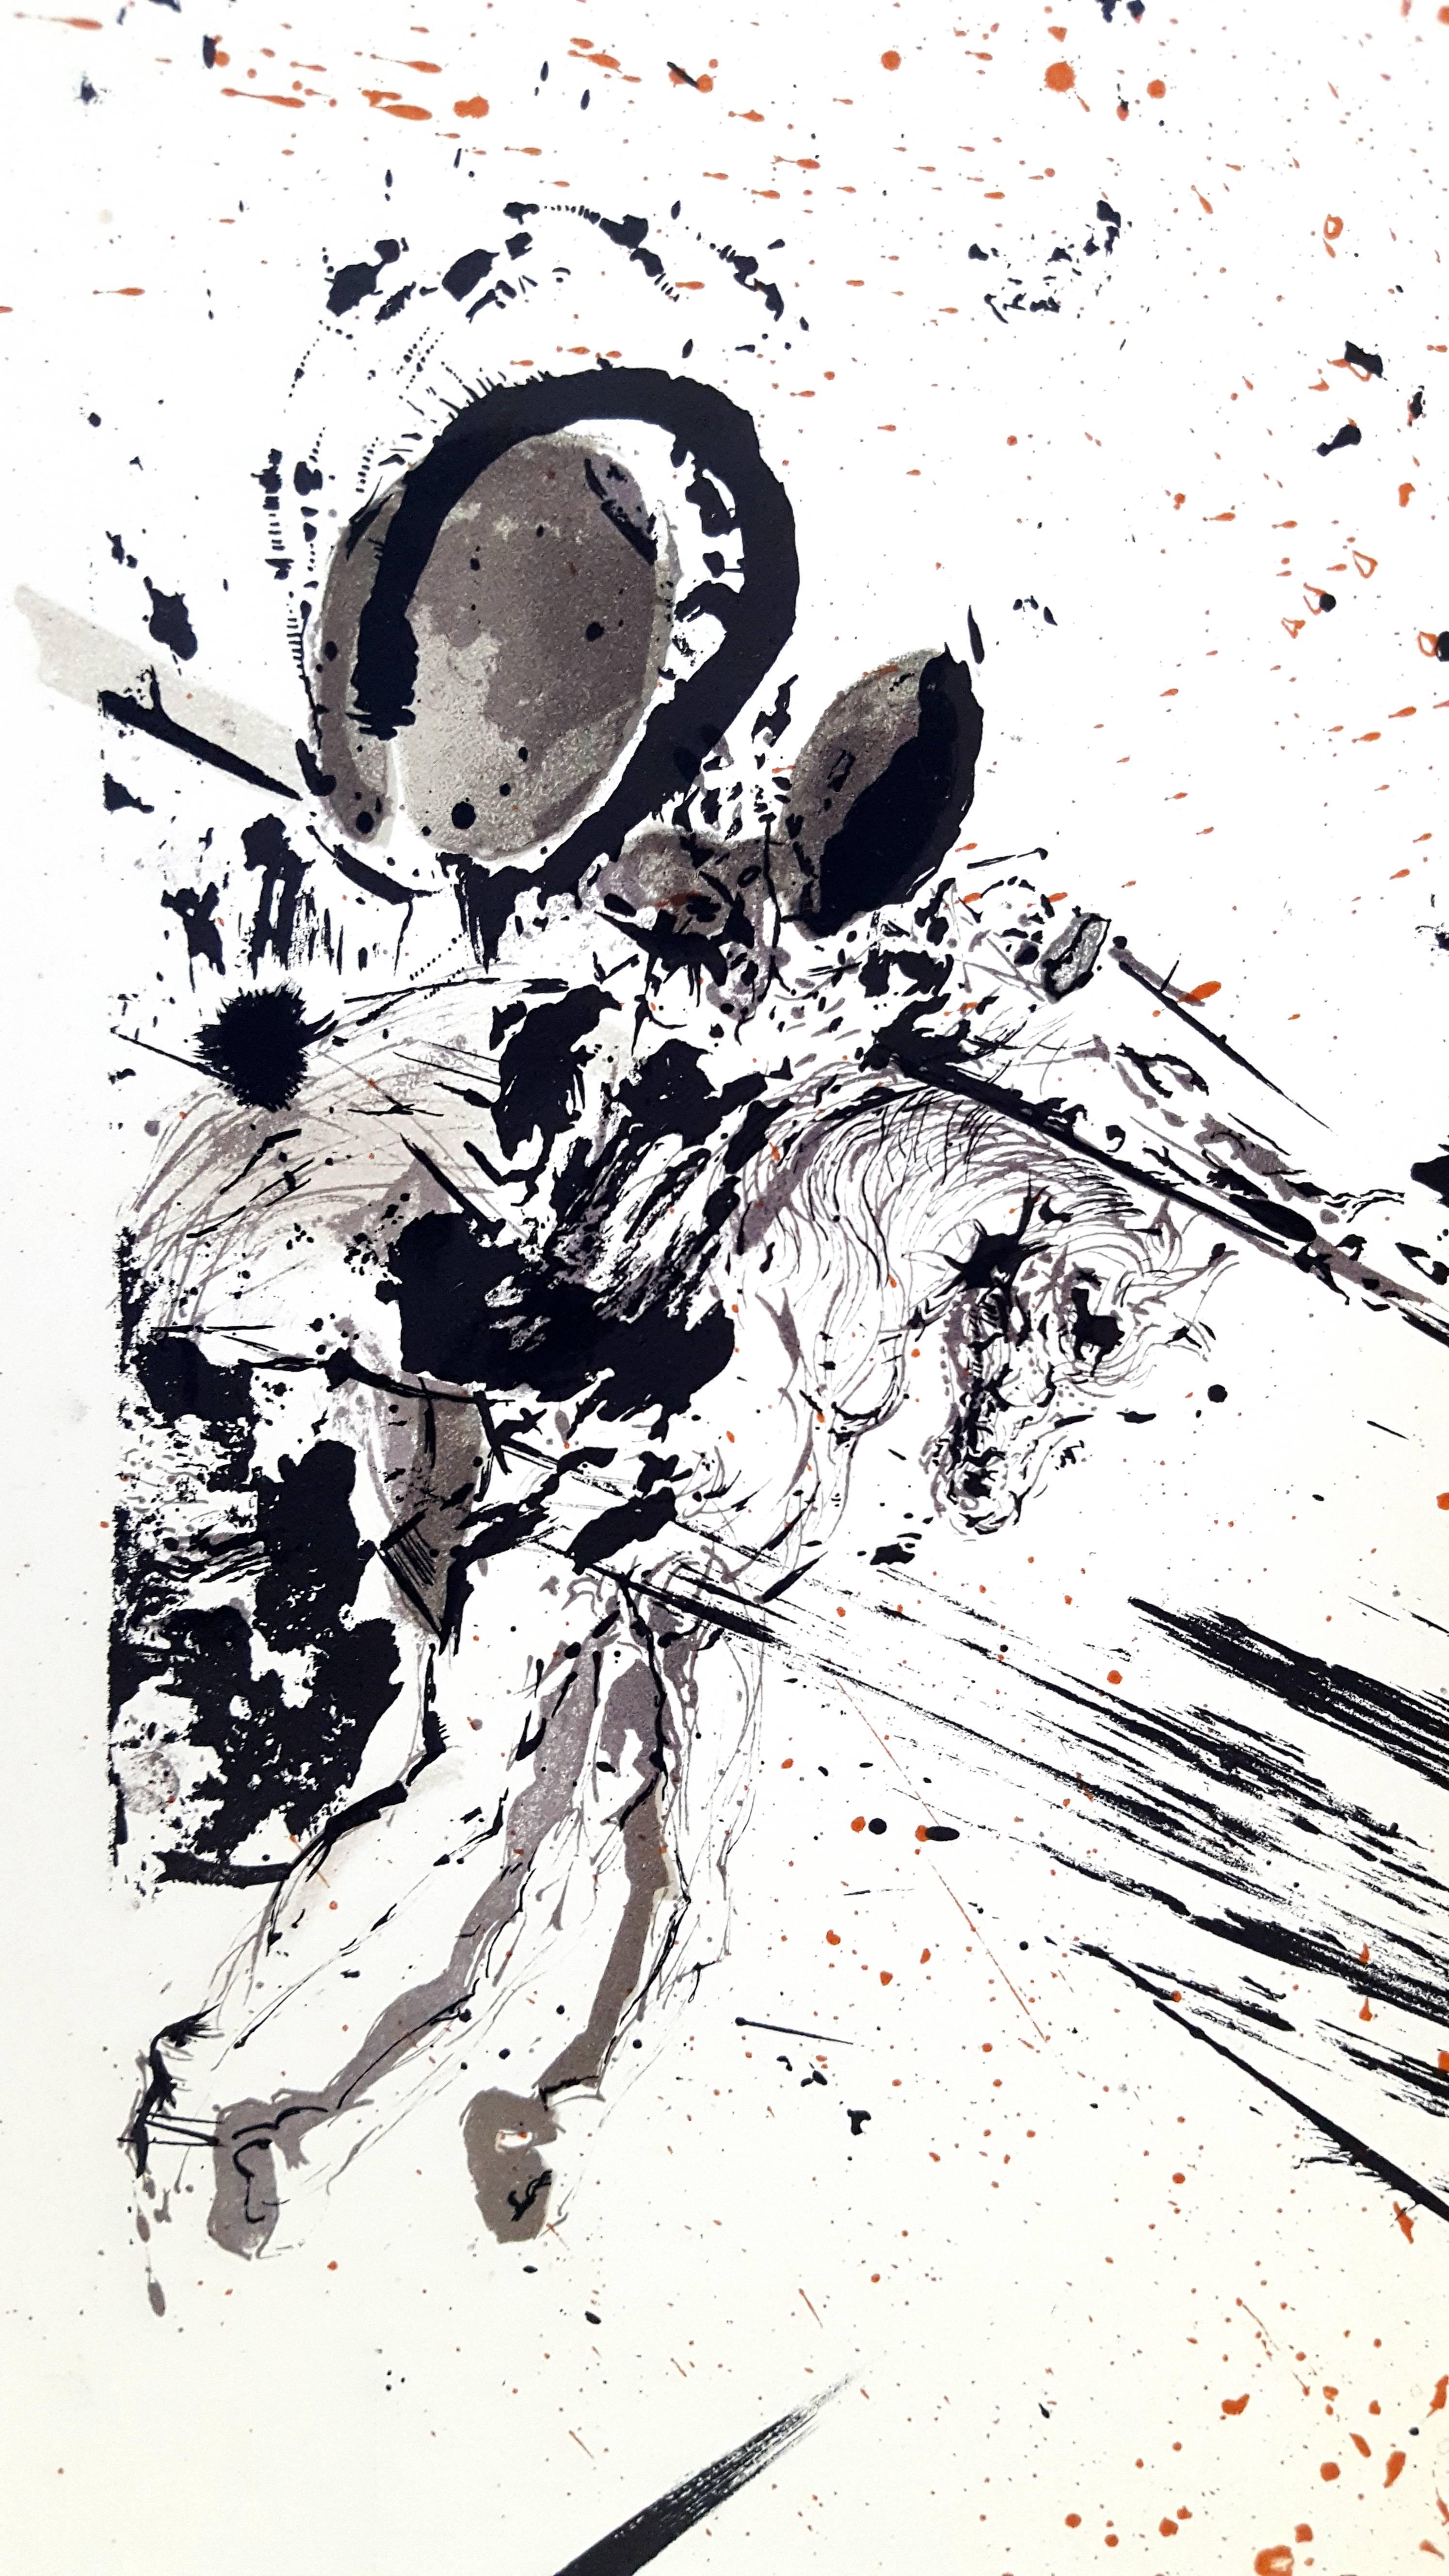 Salvador Dali - Don Quichotte - Original Lithograph
Joseph FORET, Paris, 1957
PRINTER : Atelier Mourlot. 
- SIGNATURE : printed in the image
- LIMITED : 197 copies. 
- PAPER : BFK Rives vellum. 
- SIZE : 25 3/8 x 16"
- REFERENCES : Field 57-1 /